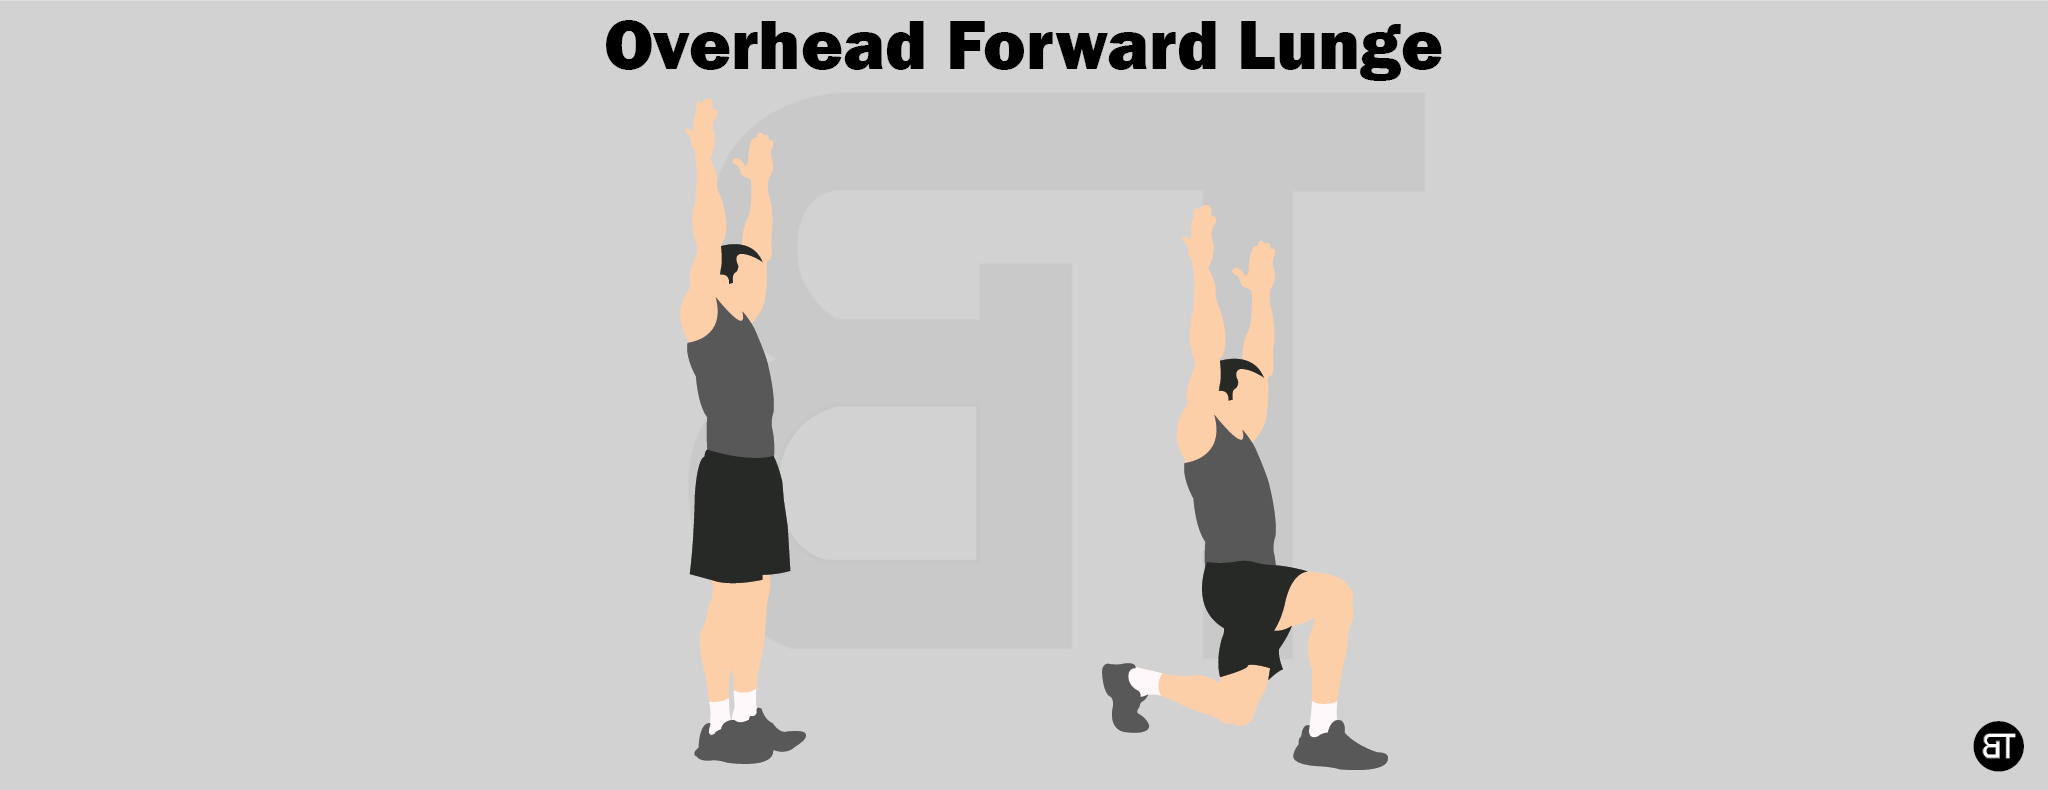 Overhead Forward Lunge